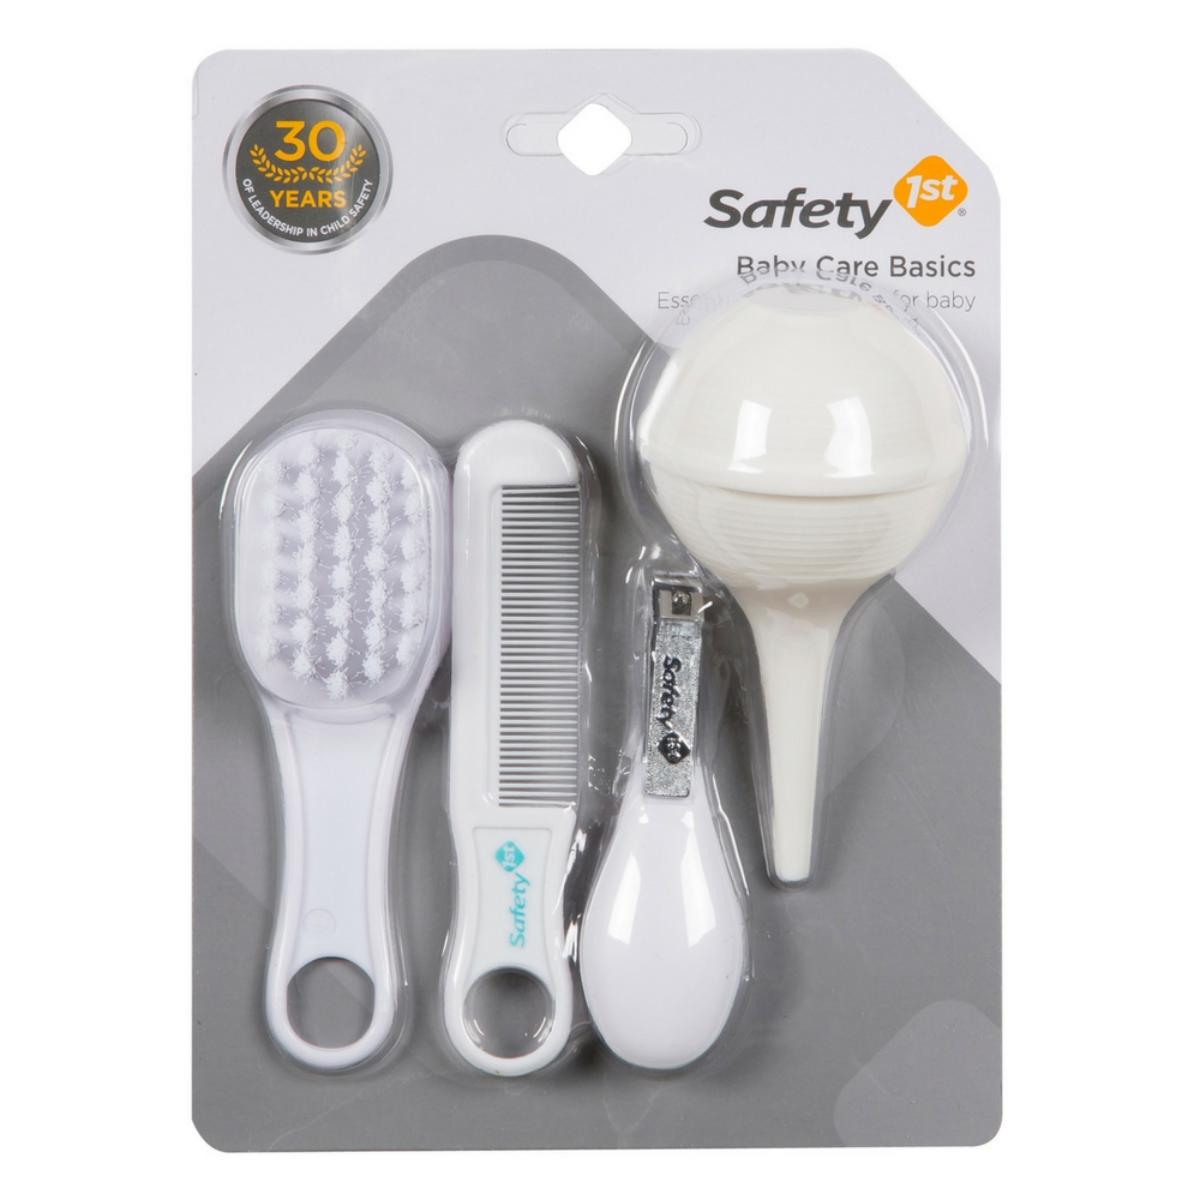 Safety 1st Baby Care Basics Set 4 Pack - 143343